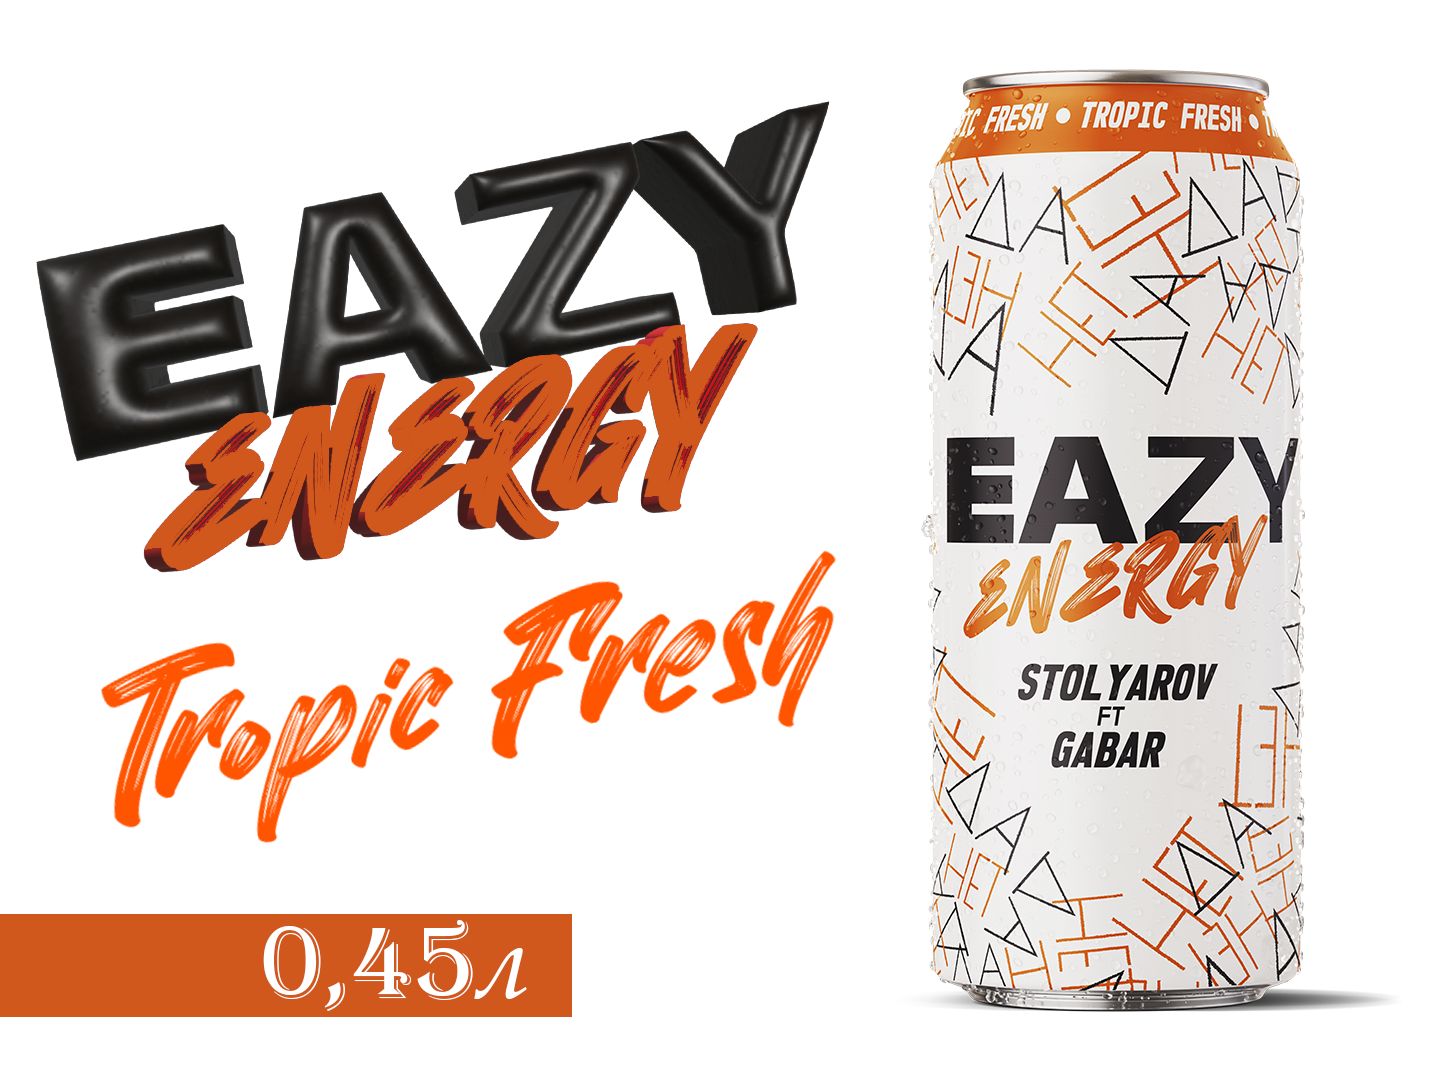 Eazy energy